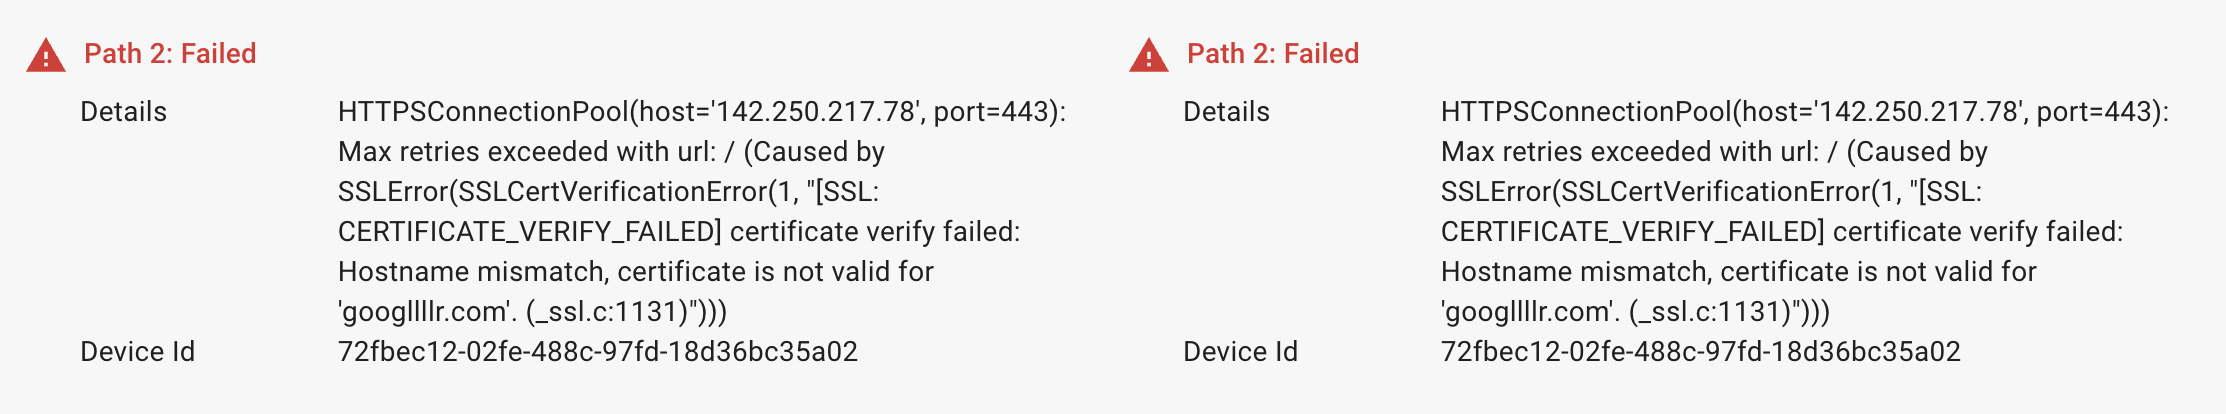 SSL_Certificate_Verify_Failed.png